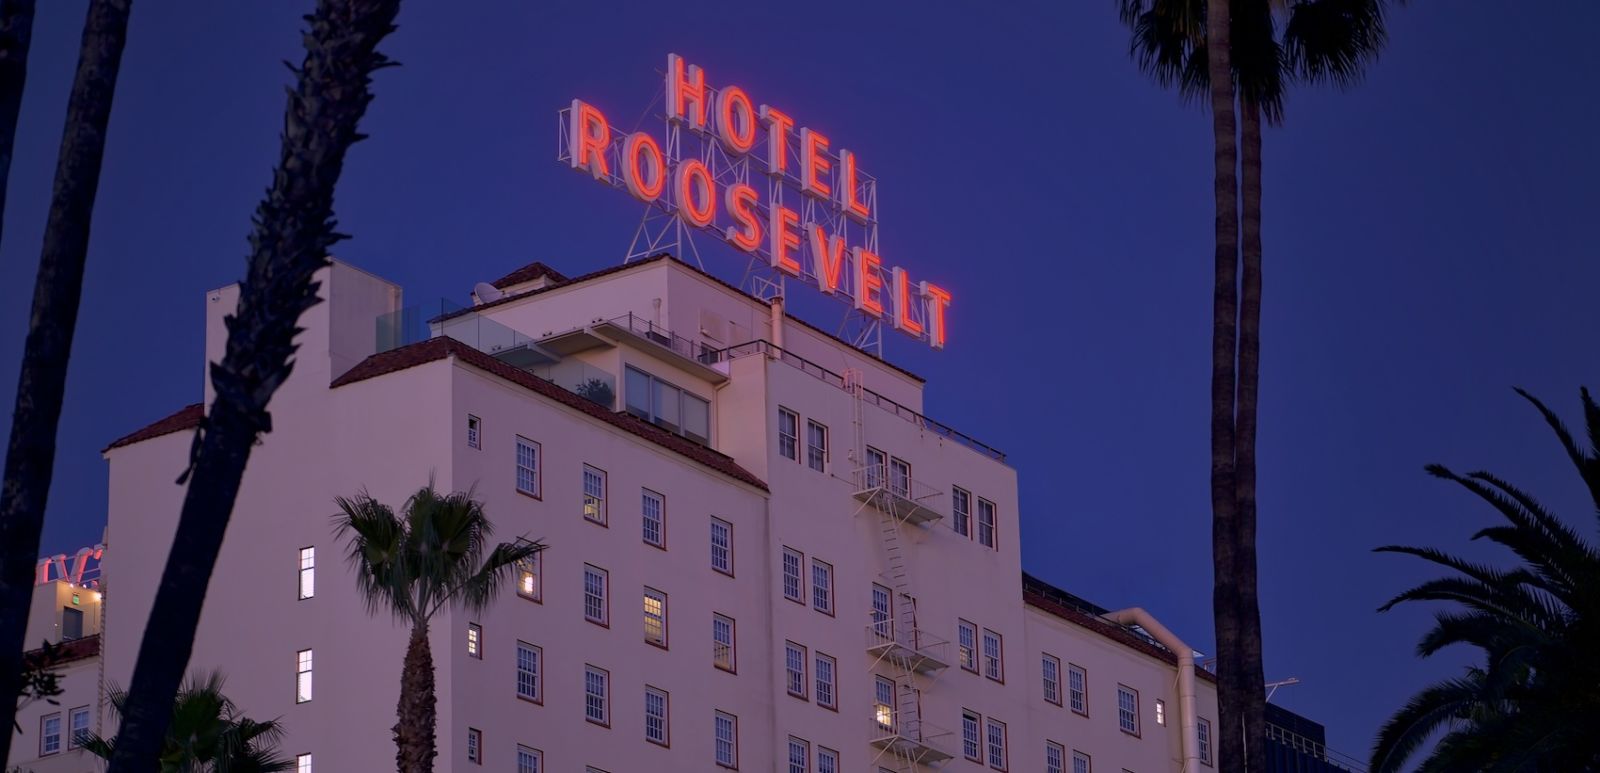 Hotel Roosevelt. Photo via Shutterstock.